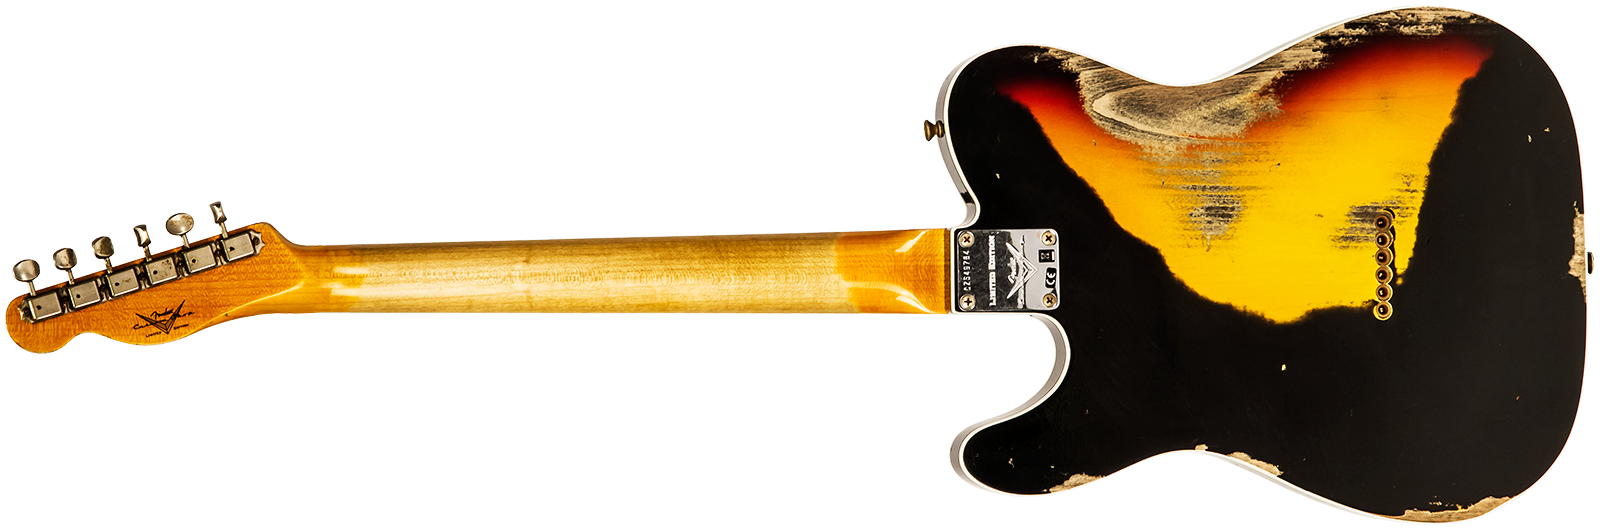 Fender Custom Shop Tele Custom 1960 Sh Ltd Hs Ht Rw #cz549784 - Heavy Relic Black Over 3-color Sunburst - Tel shape electric guitar - Variation 1